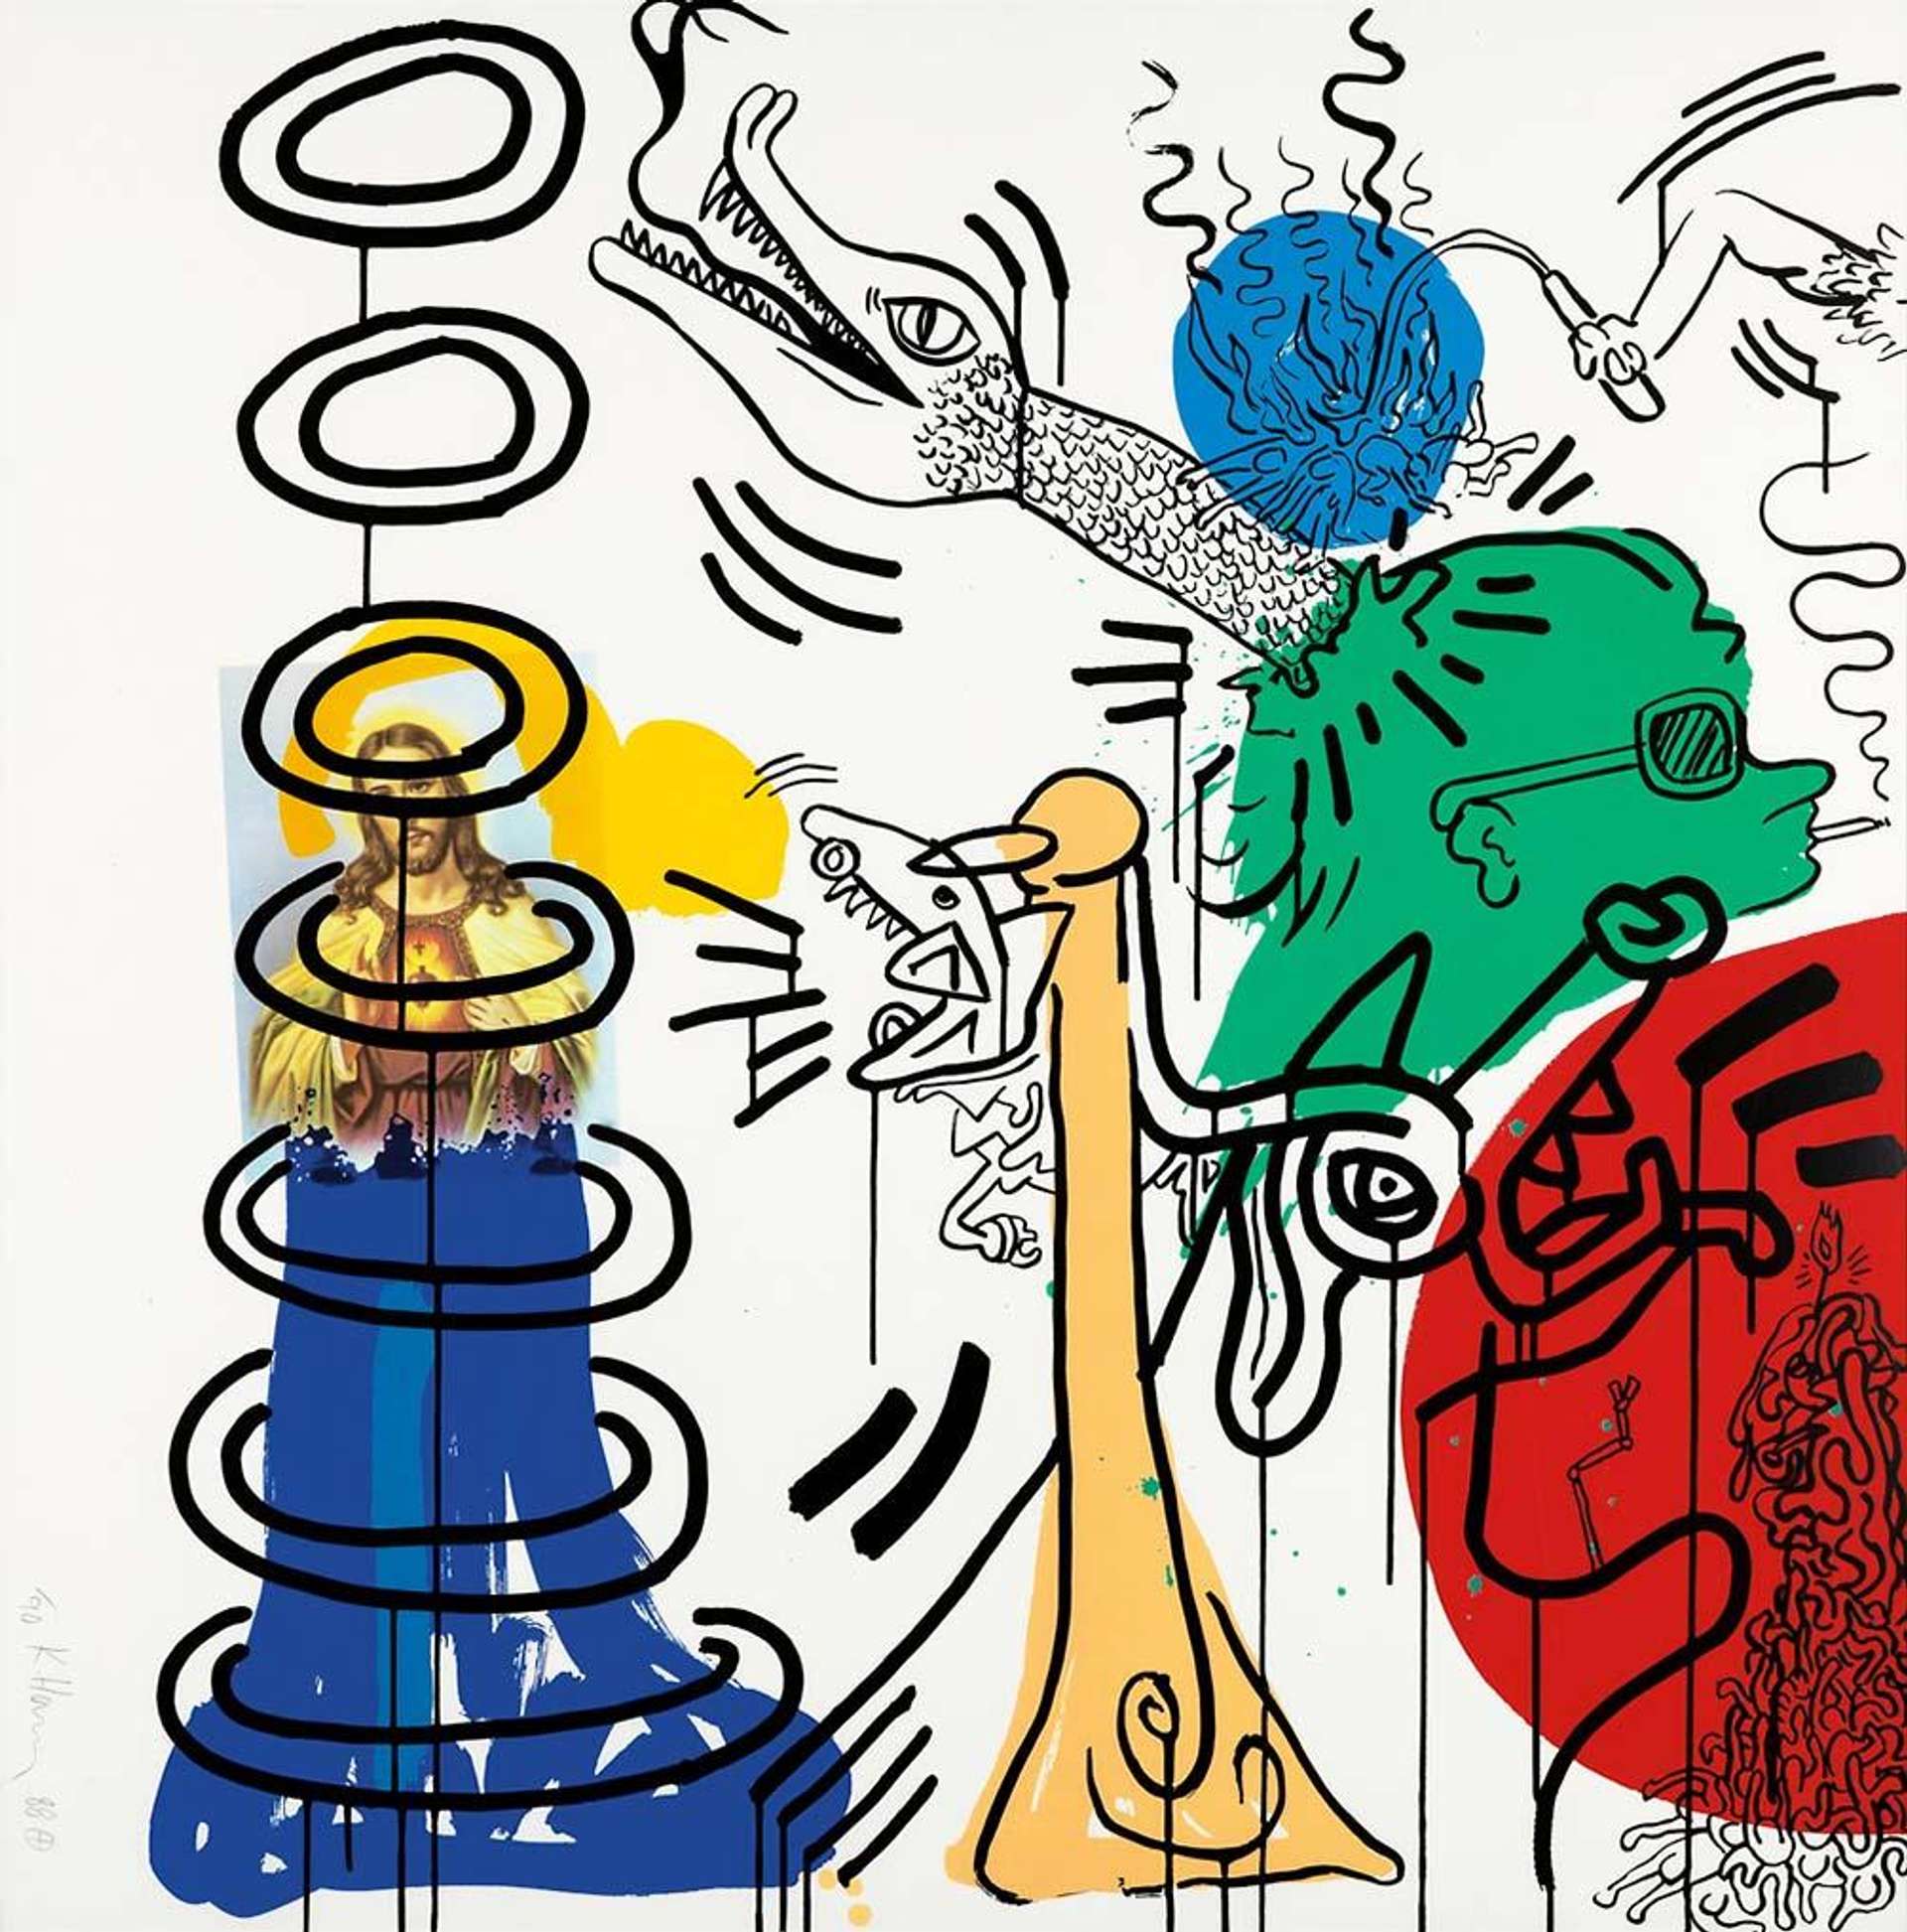 Apocalypse 5 - Signed Print by Keith Haring 1988 - MyArtBroker